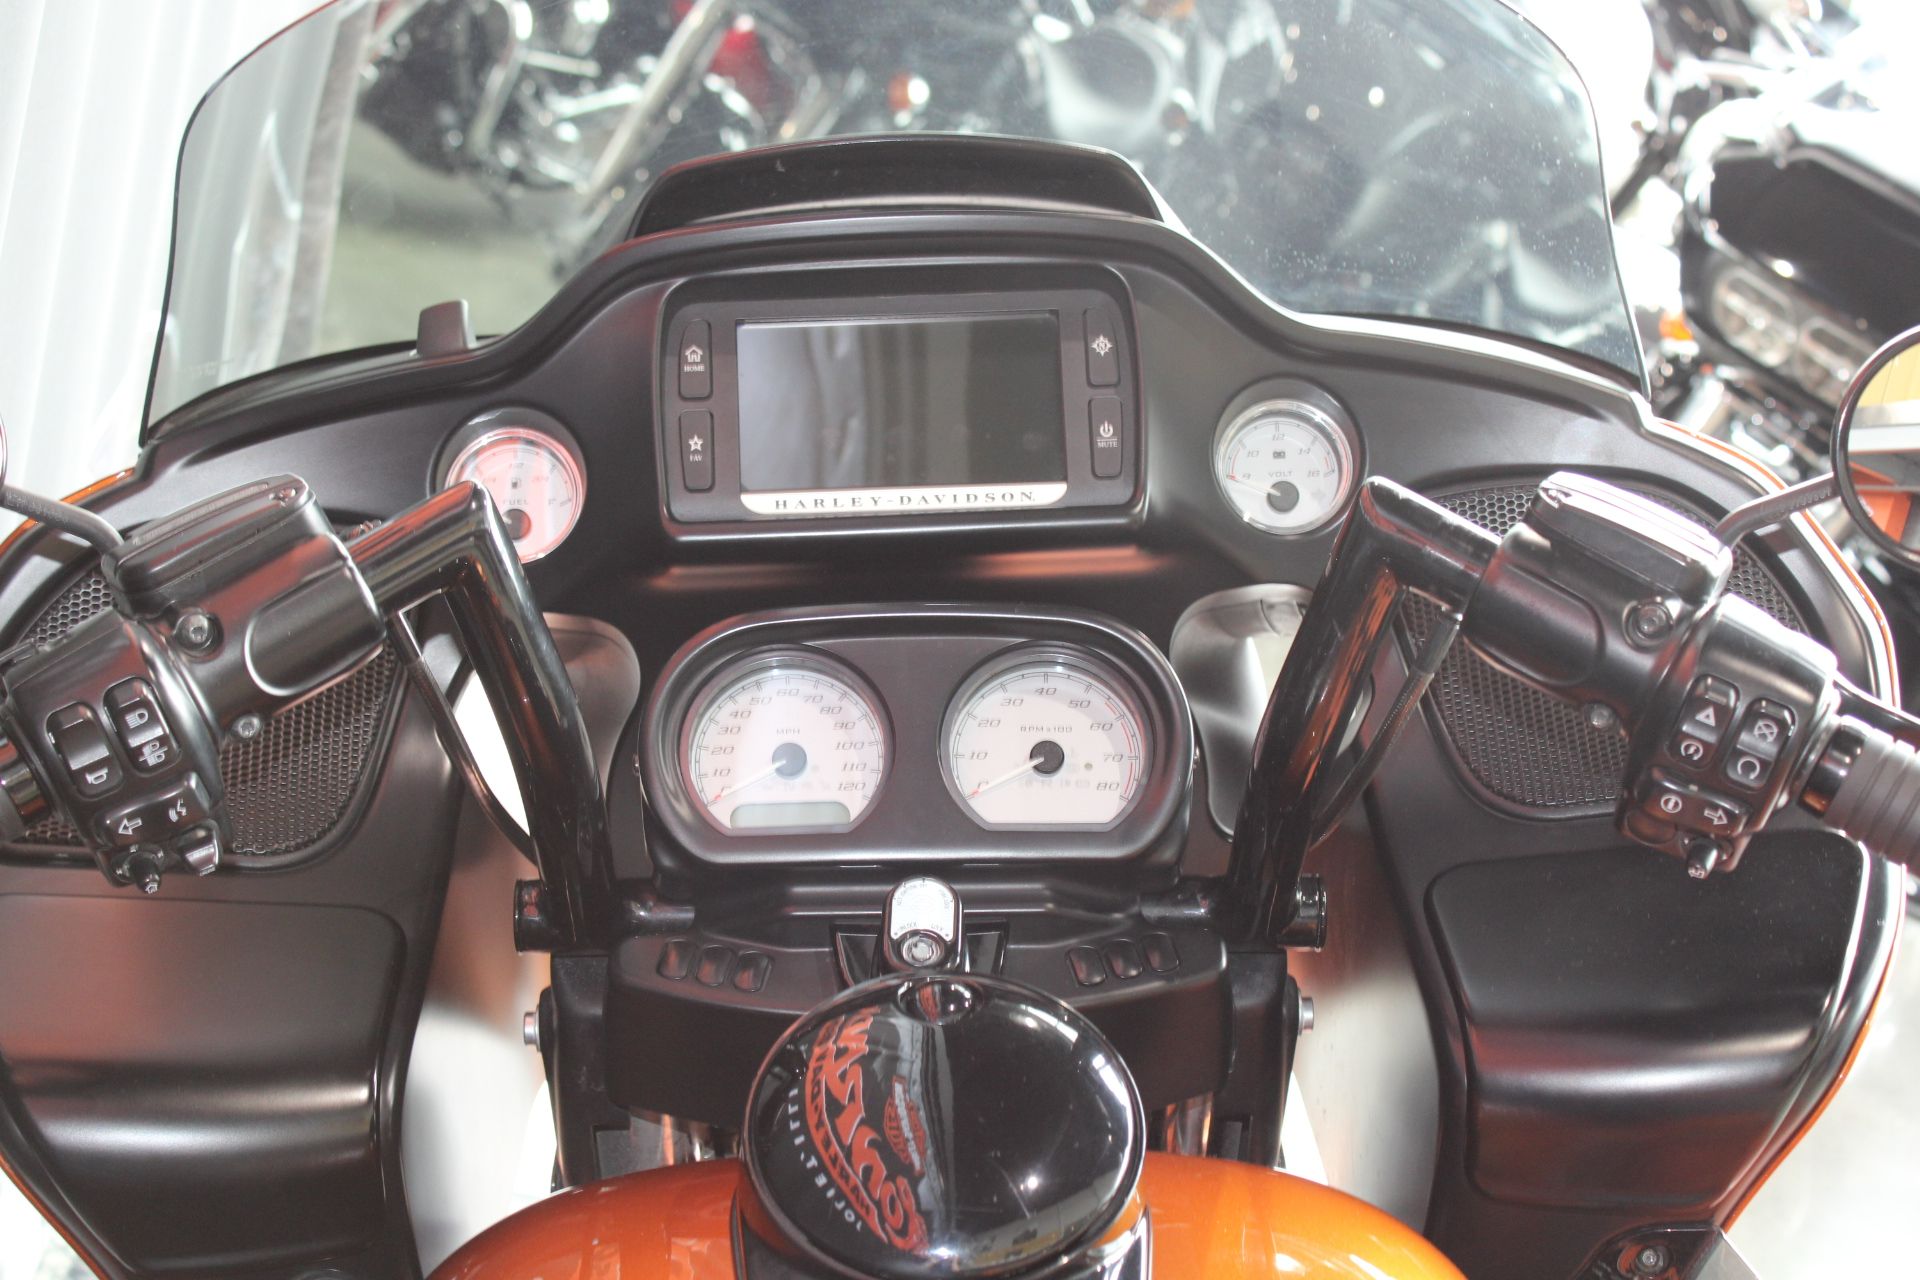 2015 Harley-Davidson Road Glide® in Shorewood, Illinois - Photo 11